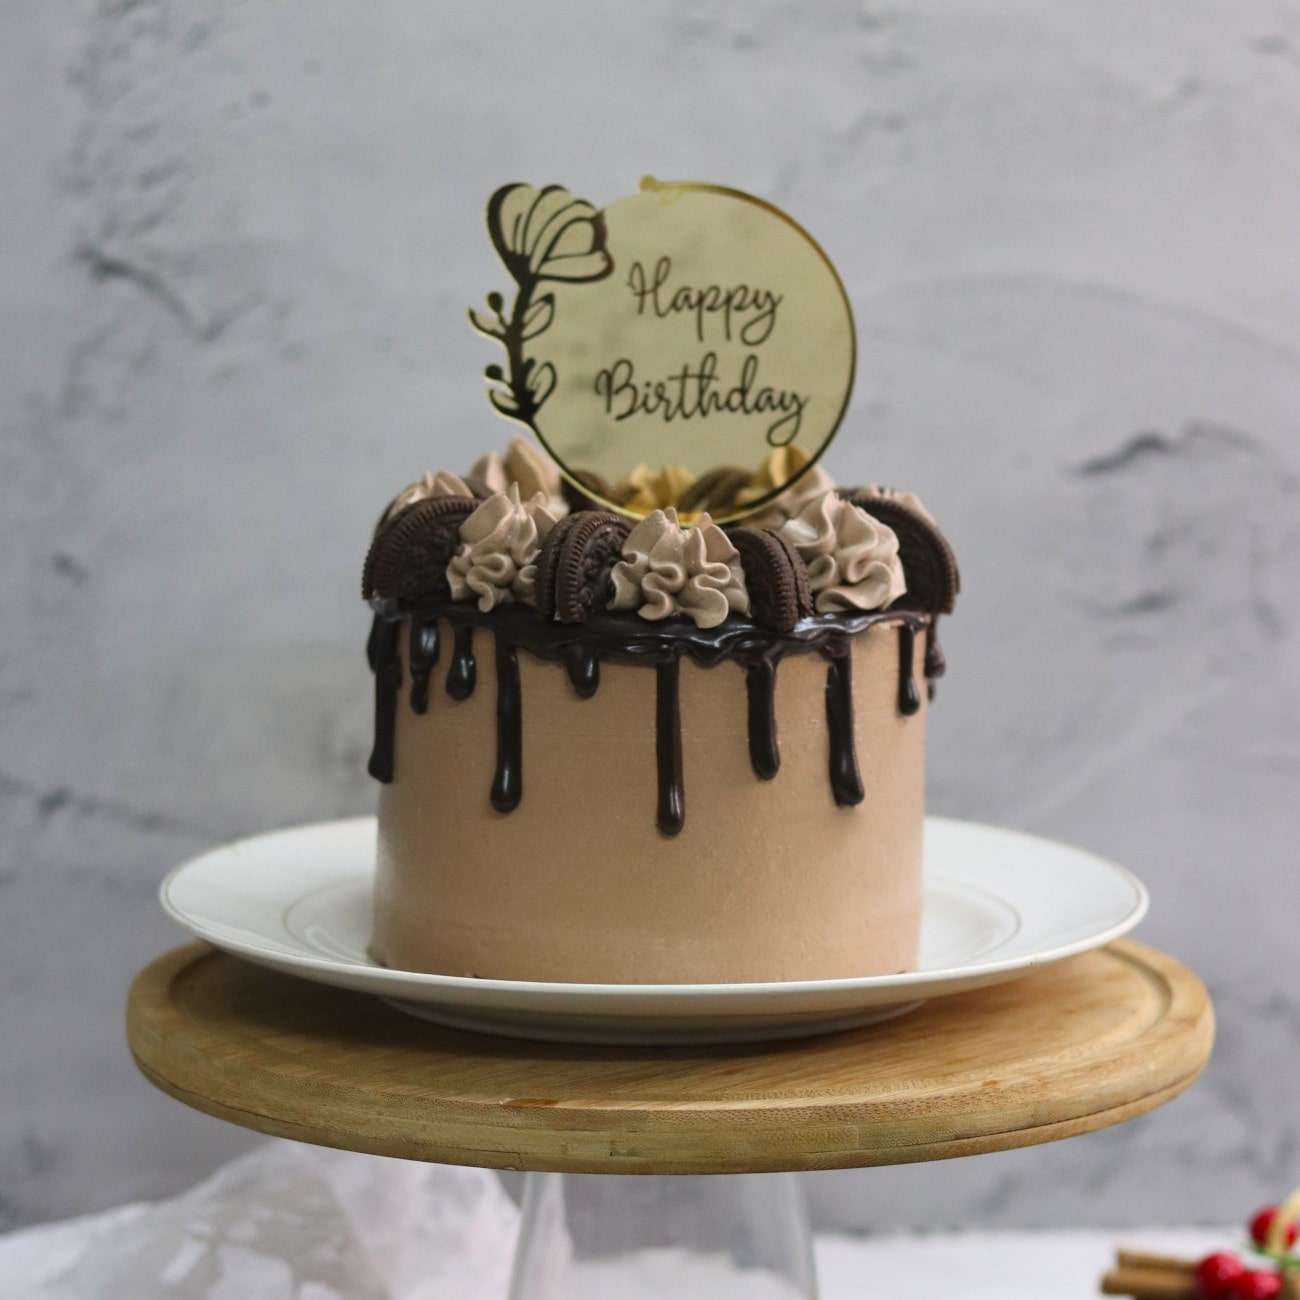 Cookies and Cream Oreo Drip Cake - The Baking Explorer